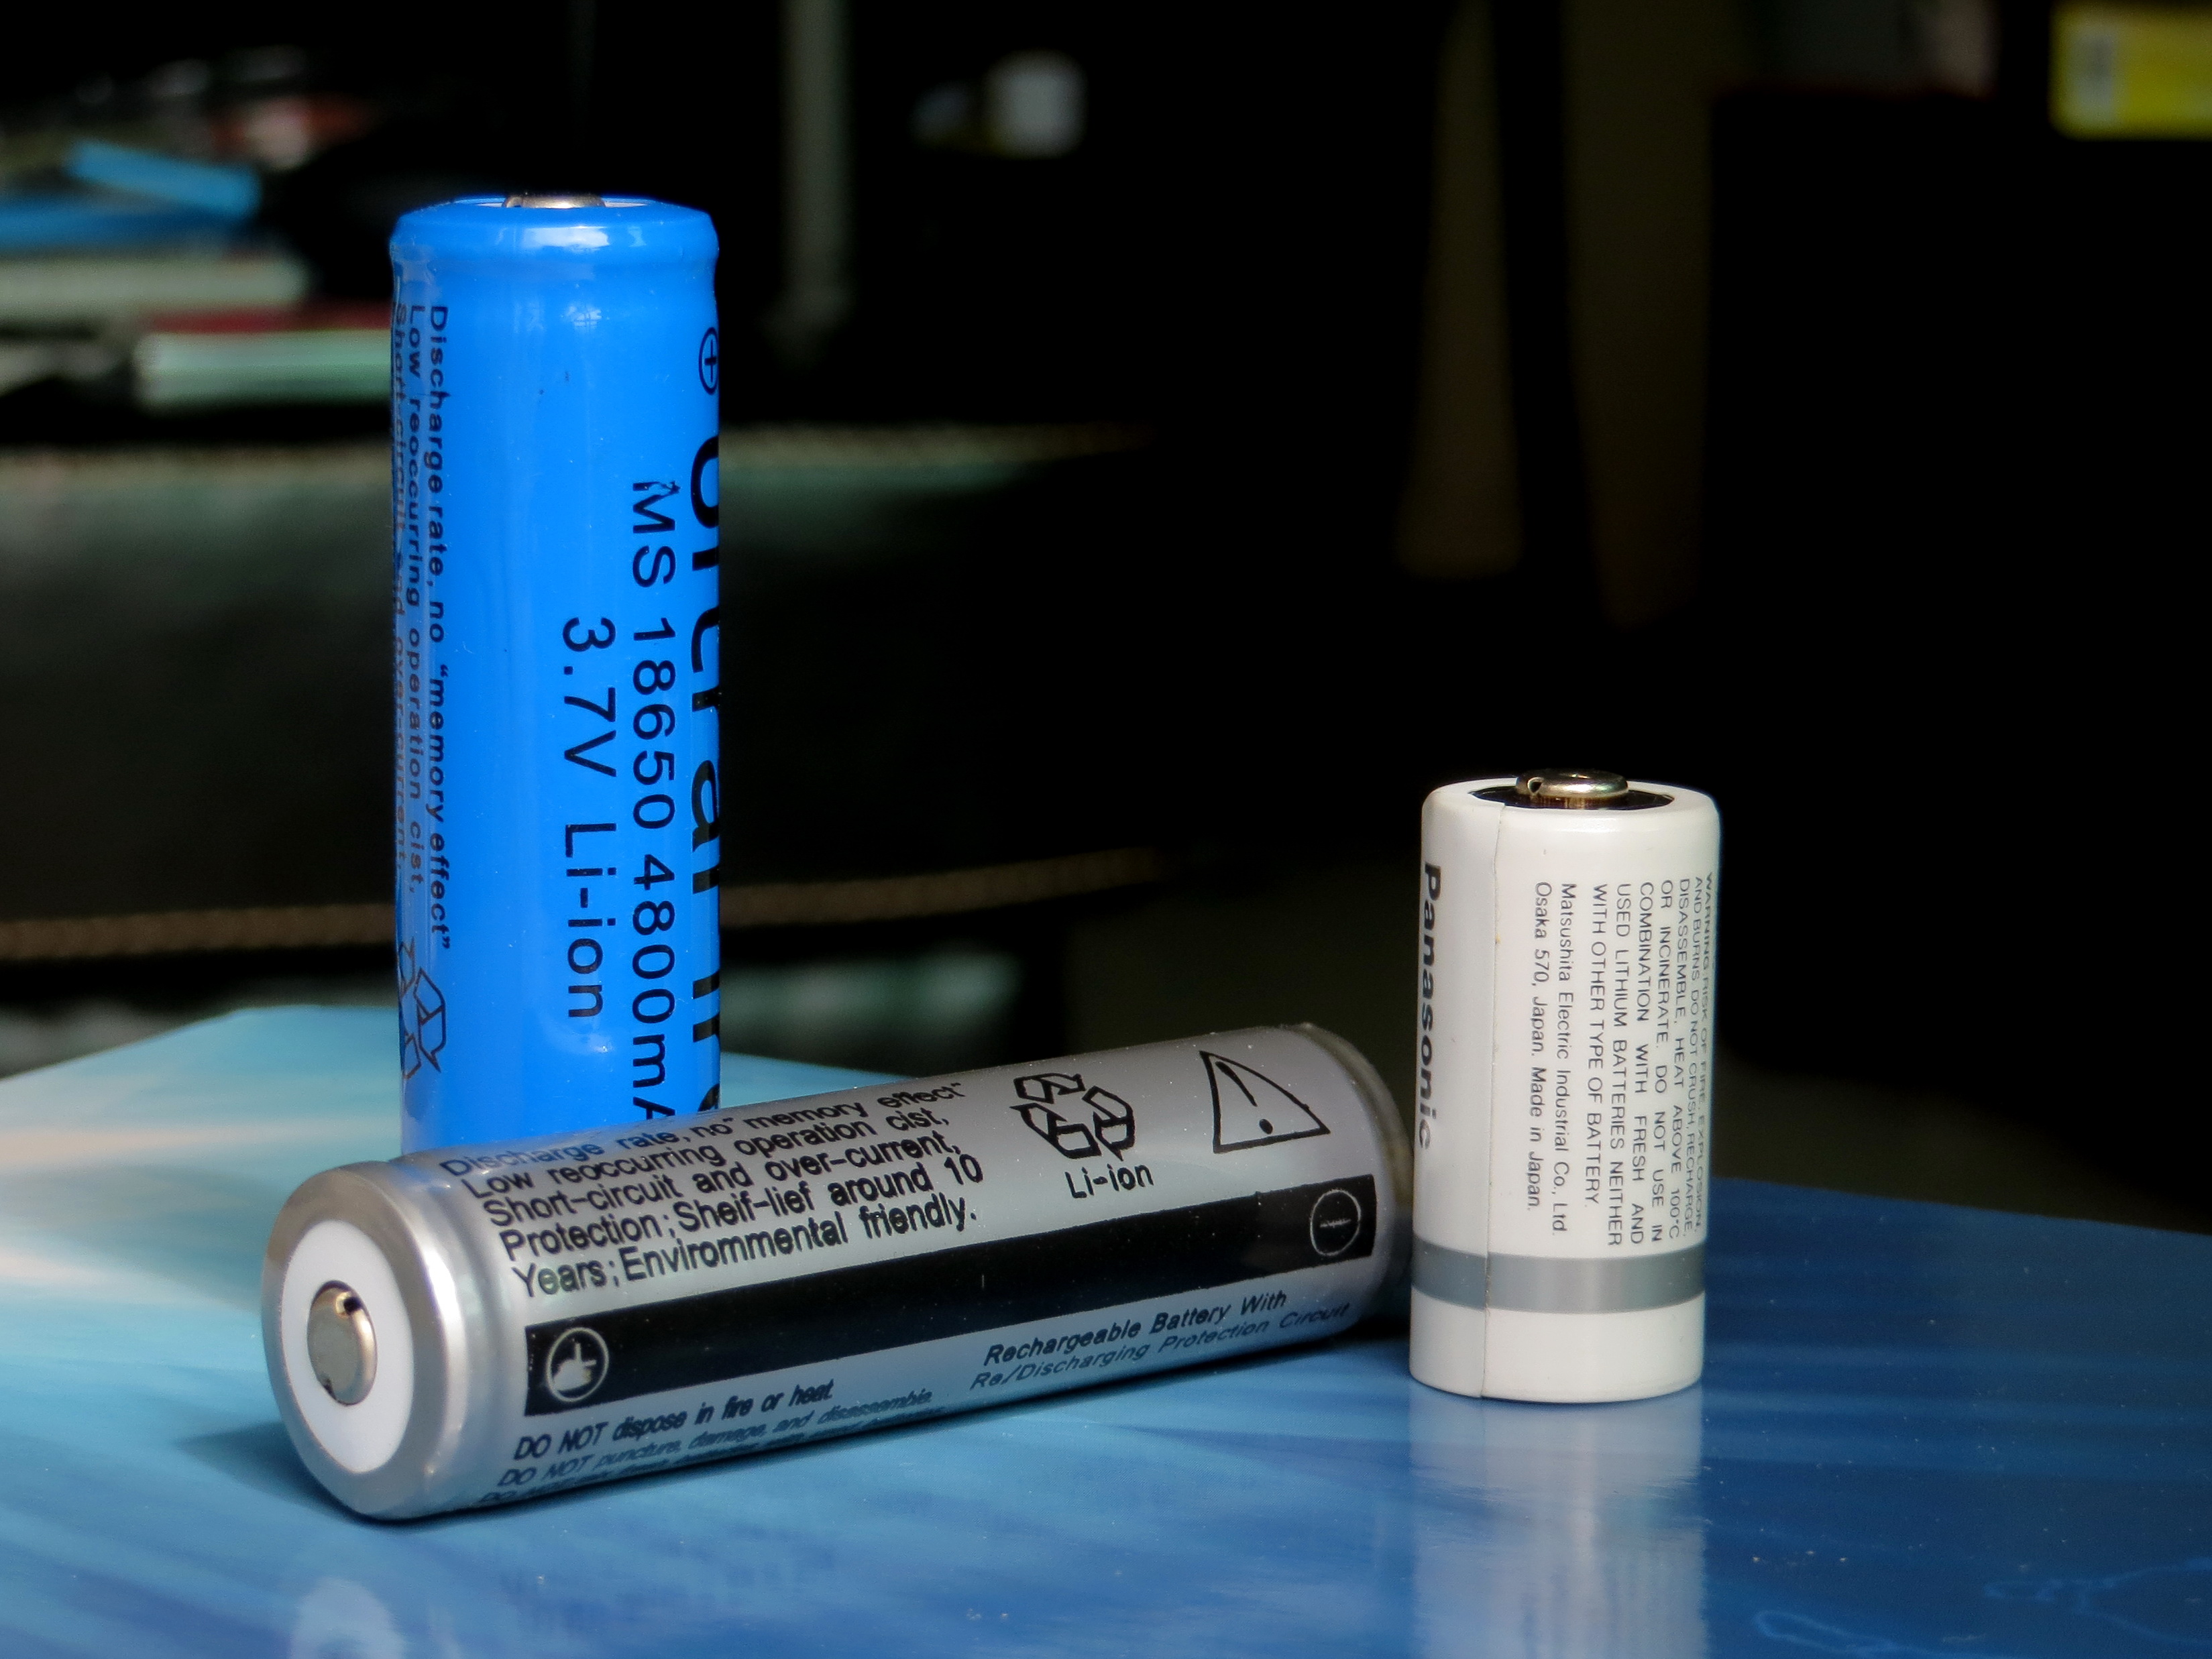 Ion batteries. Li-ion Battery 18650. Panasonic CR 123h. Литиево ионные батареи.